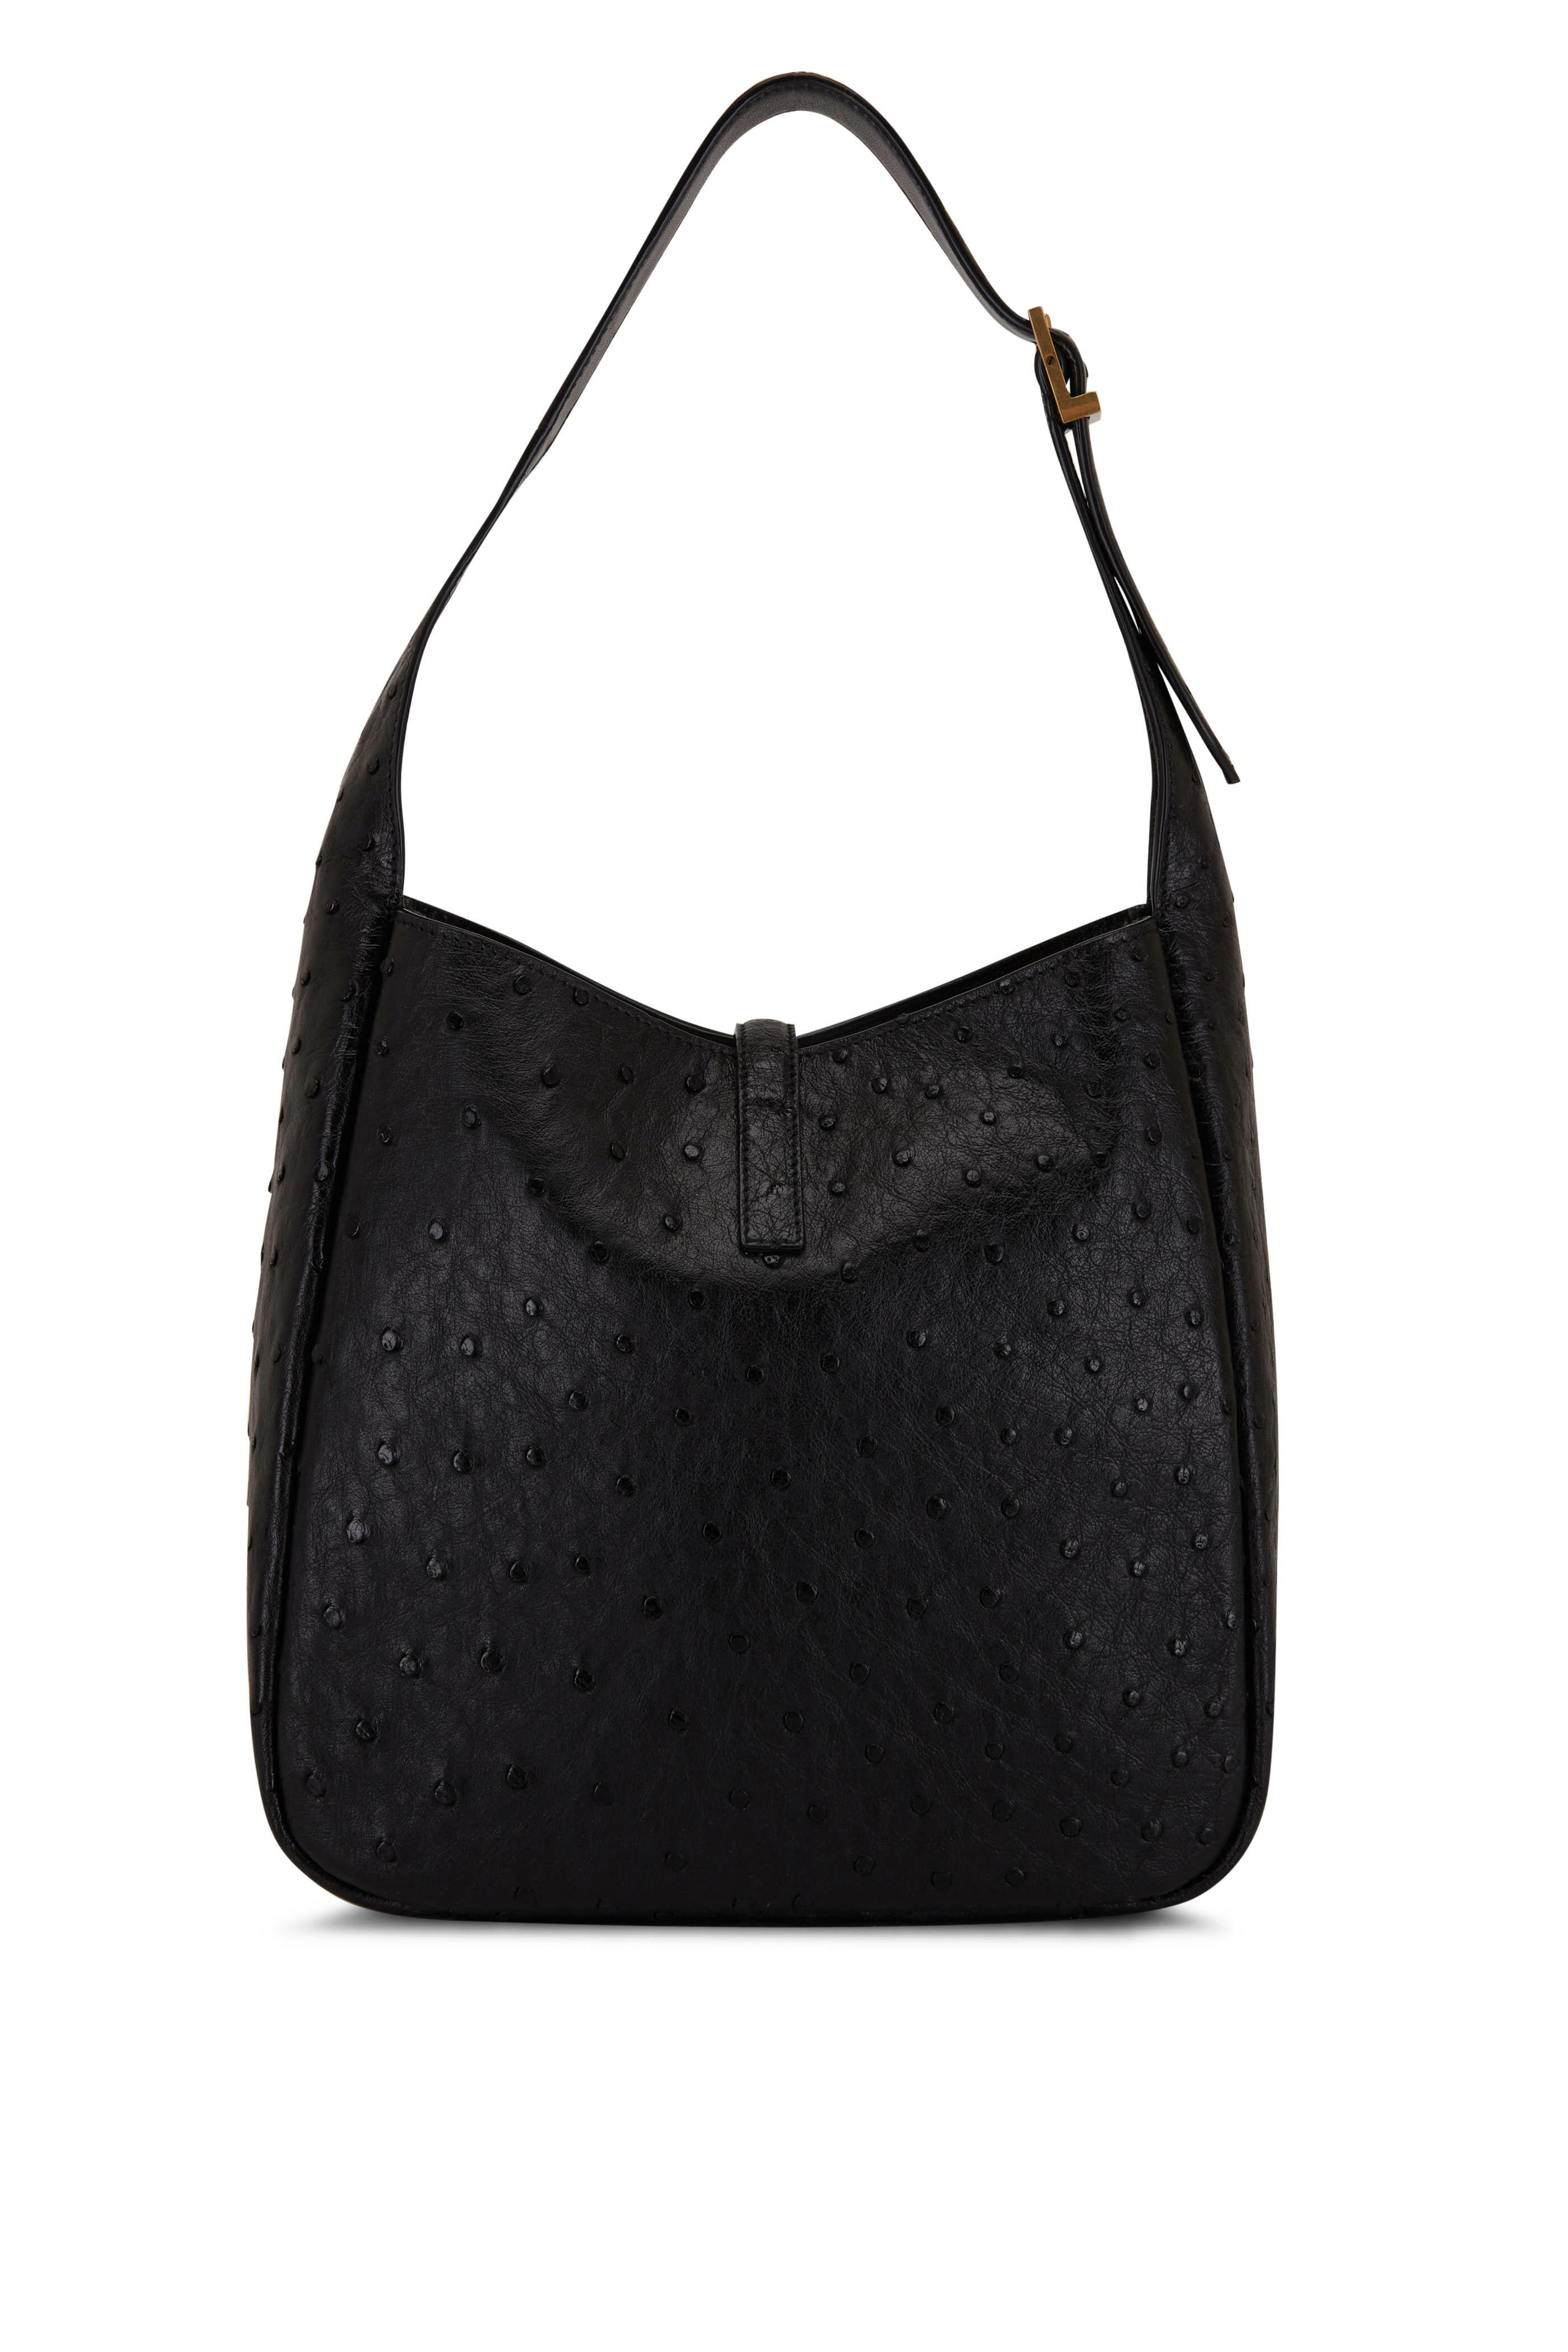 Saint Laurent Women's Black Monogram Hobo Shoulder Bag | by Mitchell Stores